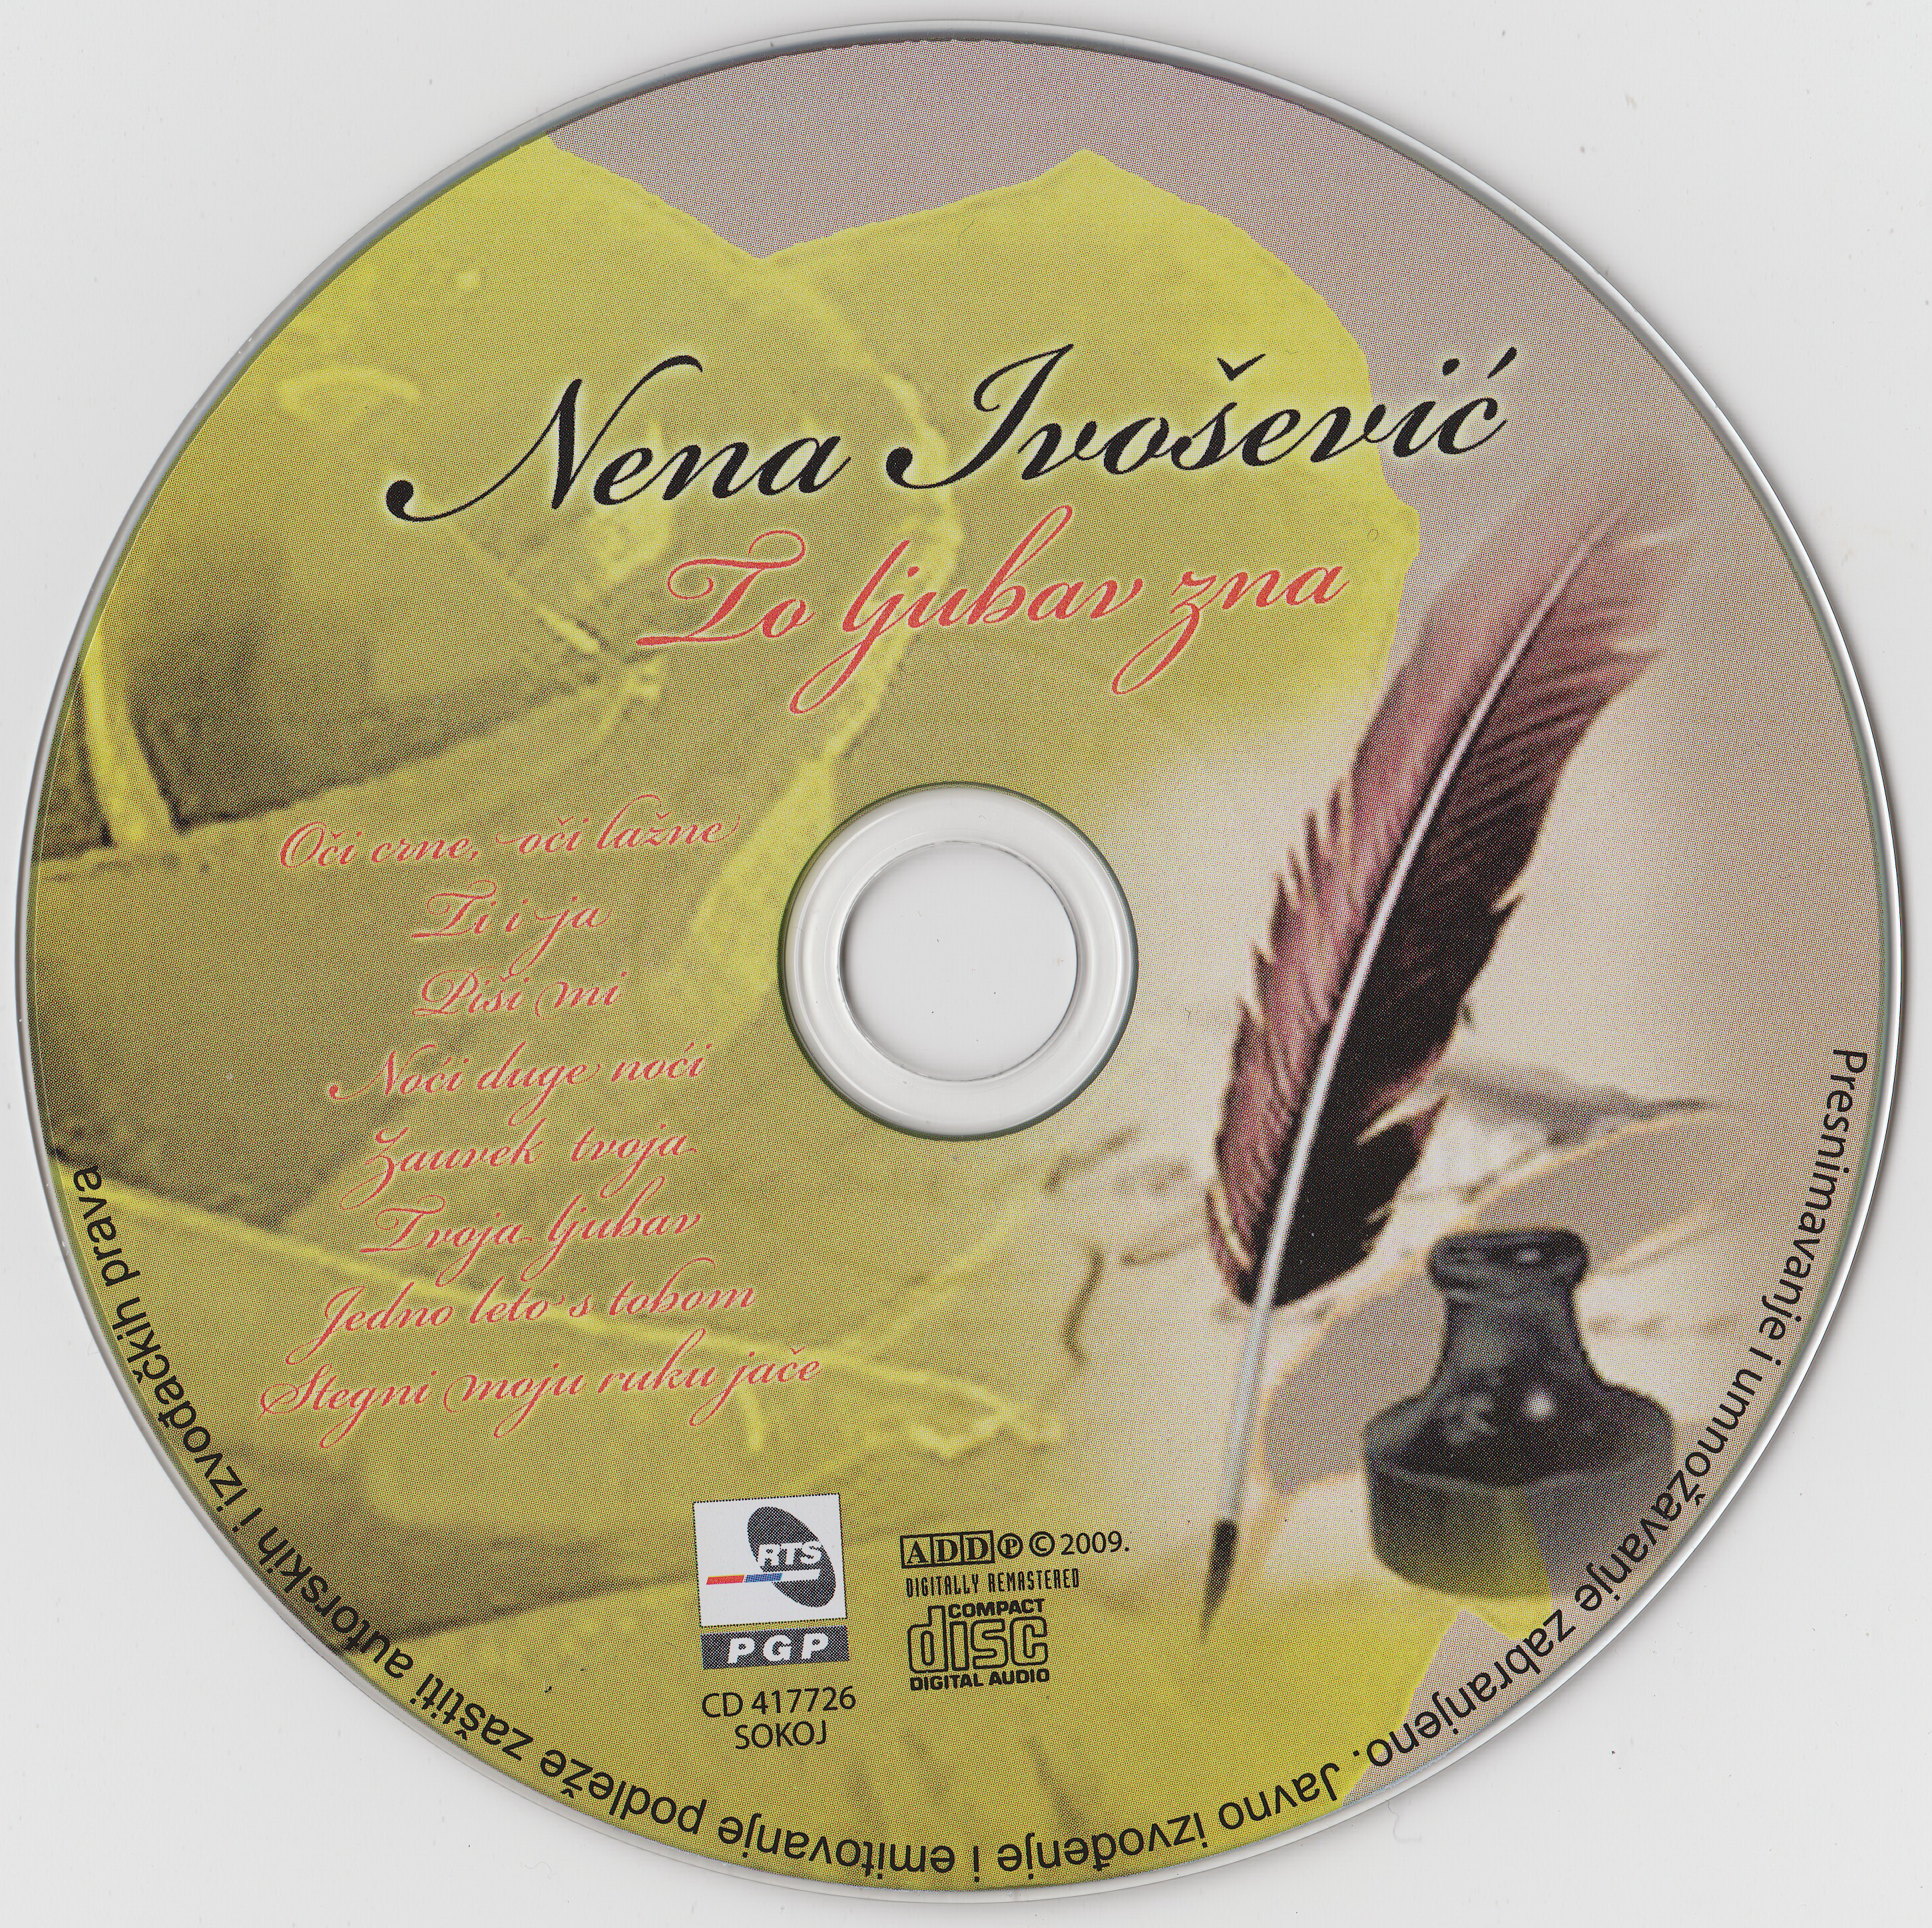 Nena Ivosevic To ljubav zna 2009 cd